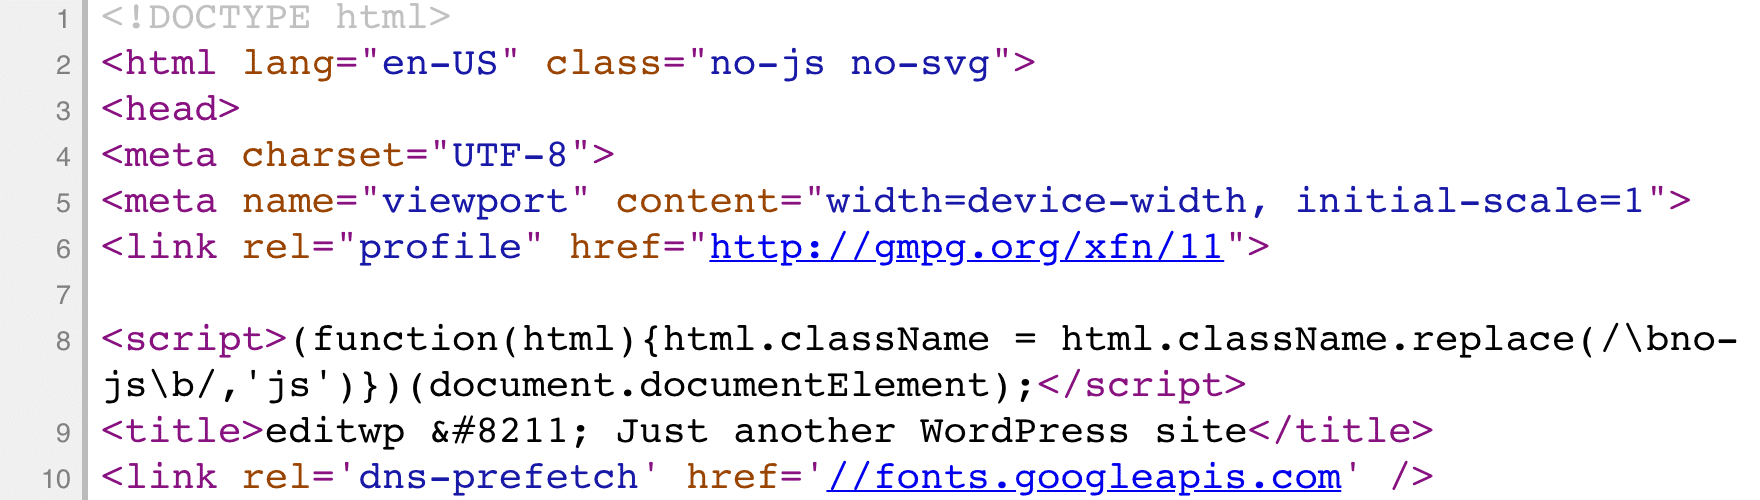 Icke-minifierad HTML-kod